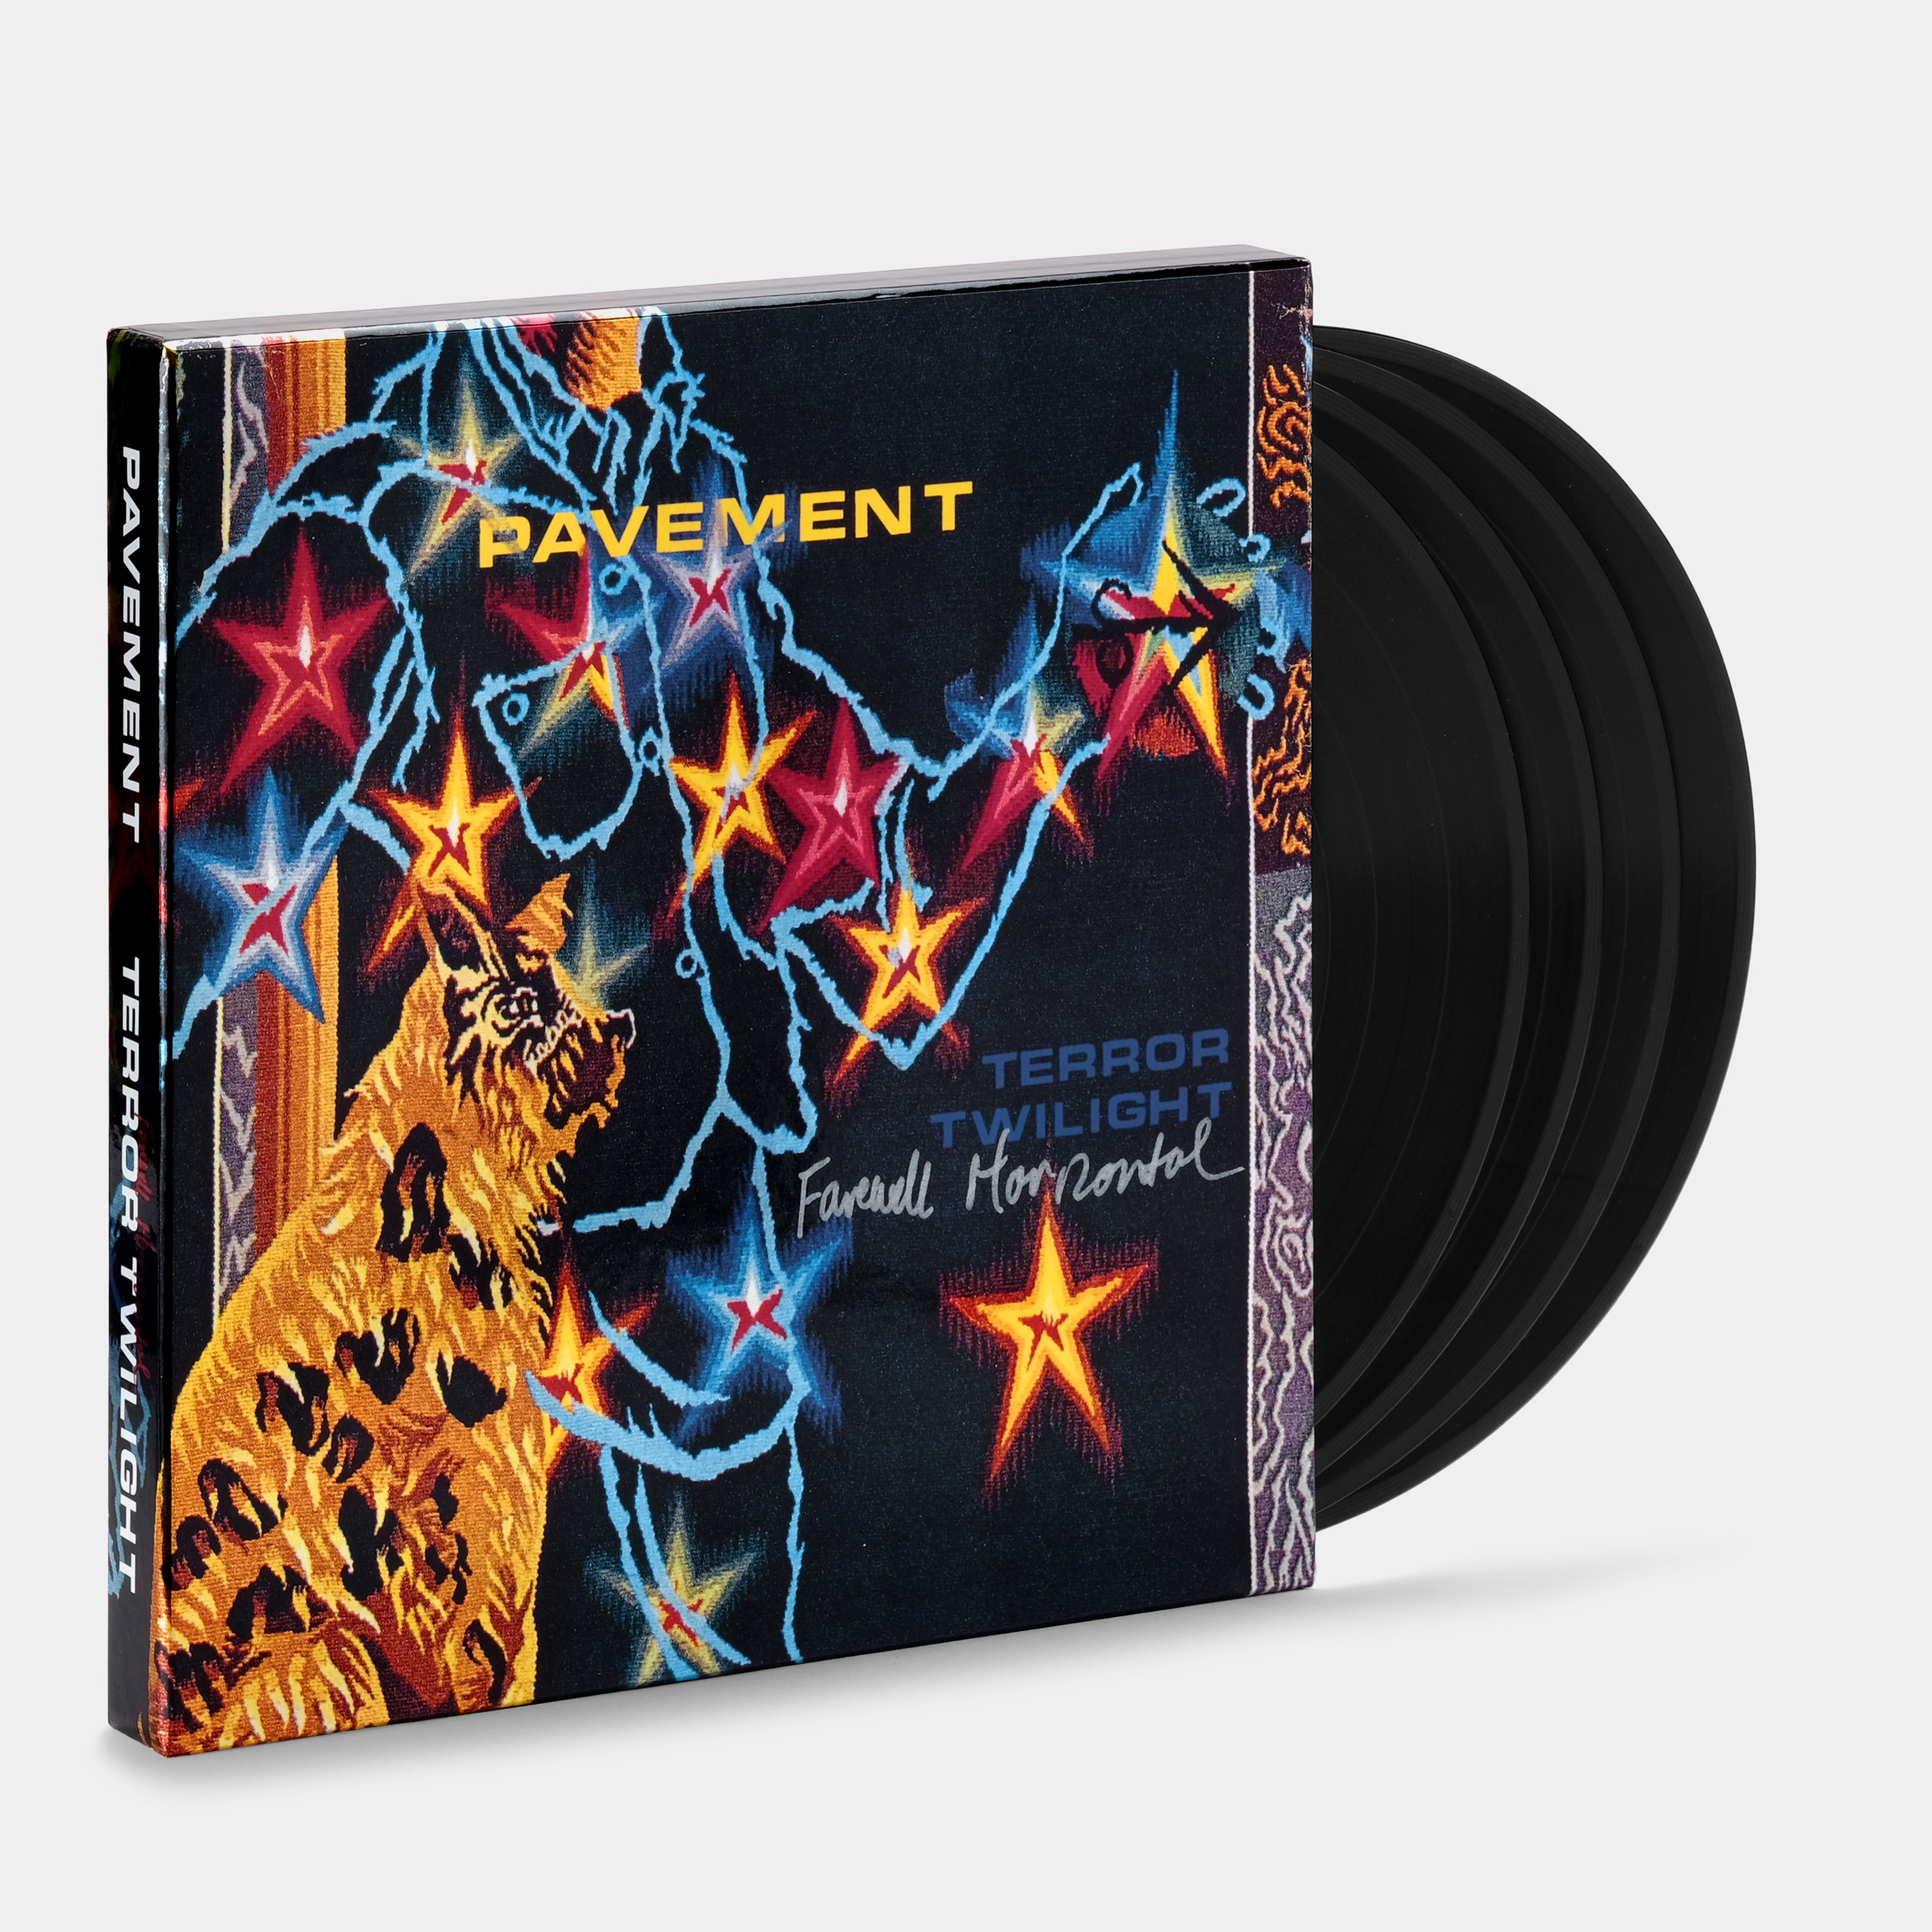 Pavement - Terror Twilight: Farewell Horizontal 4xLP Box Set Vinyl Record